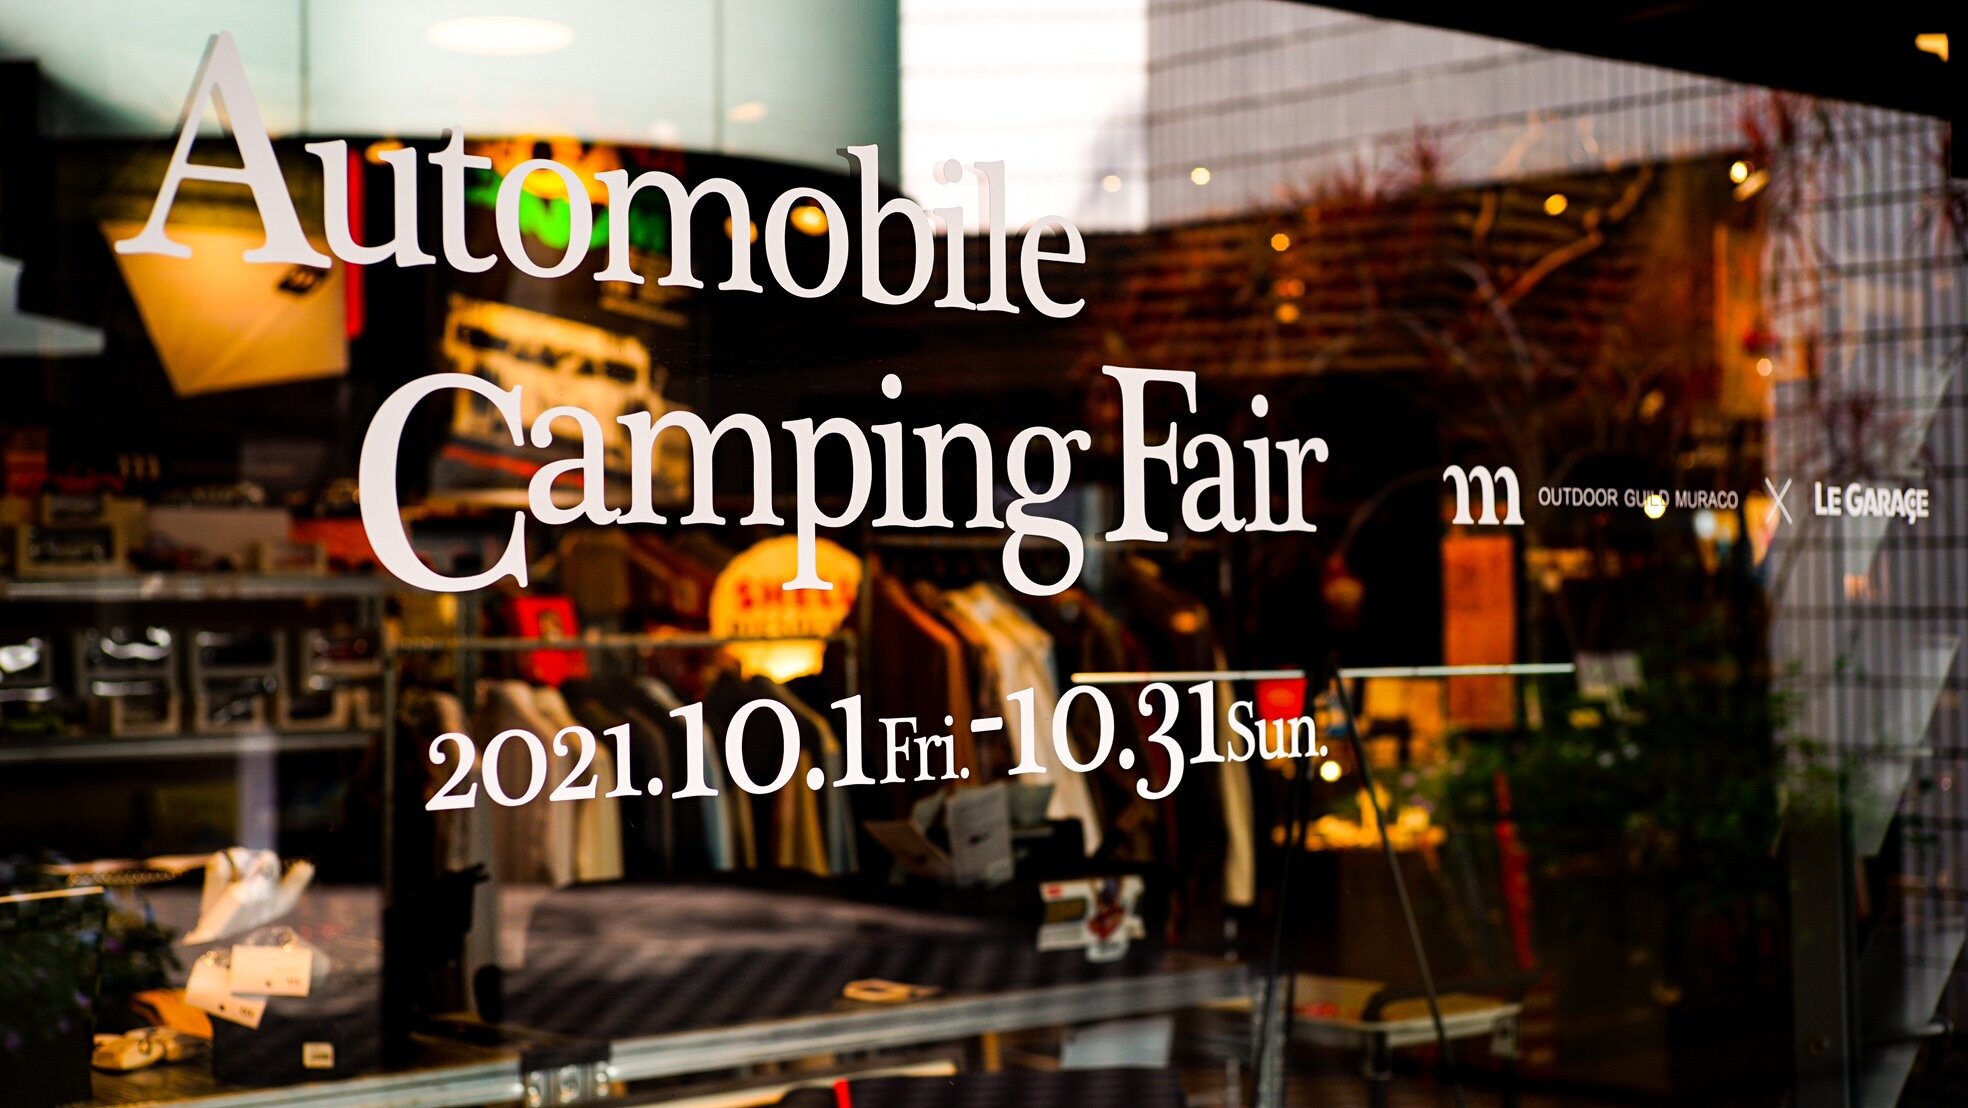 Automobile Camping Fair 